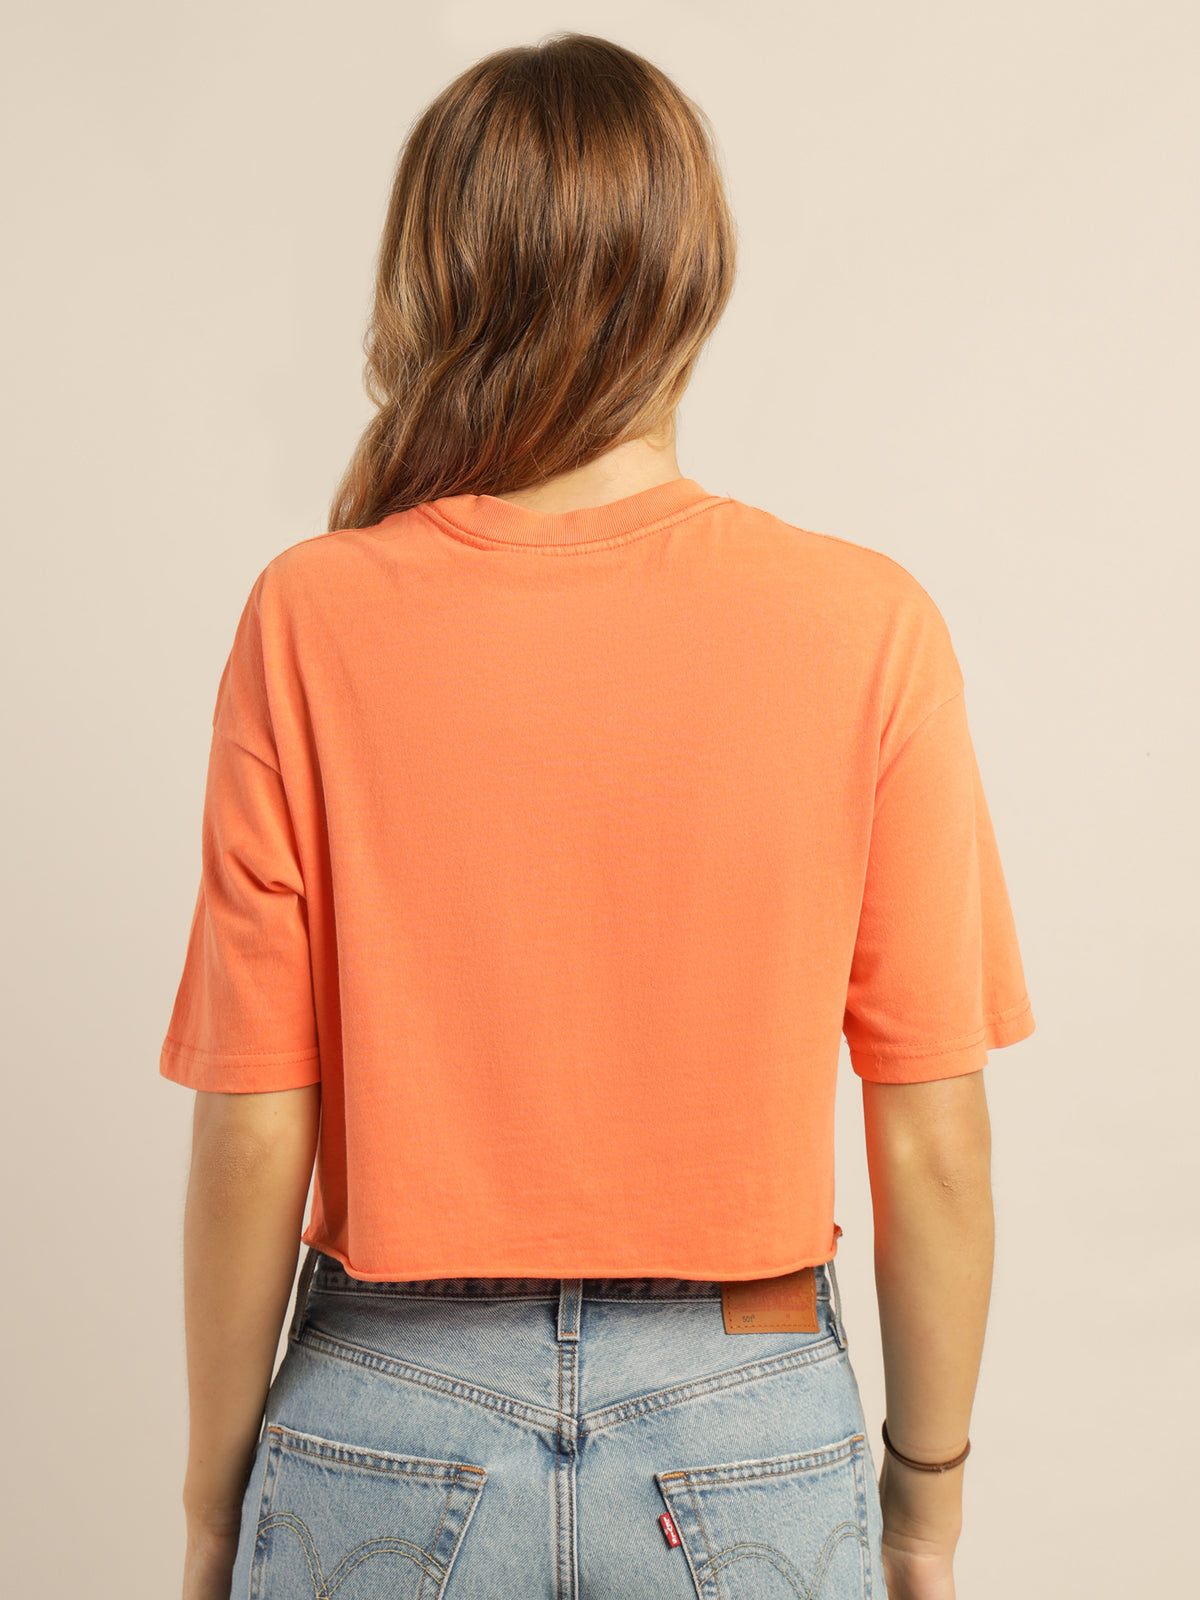 Phoenix Suns Vintage Crop T-Shirt in Faded Orange